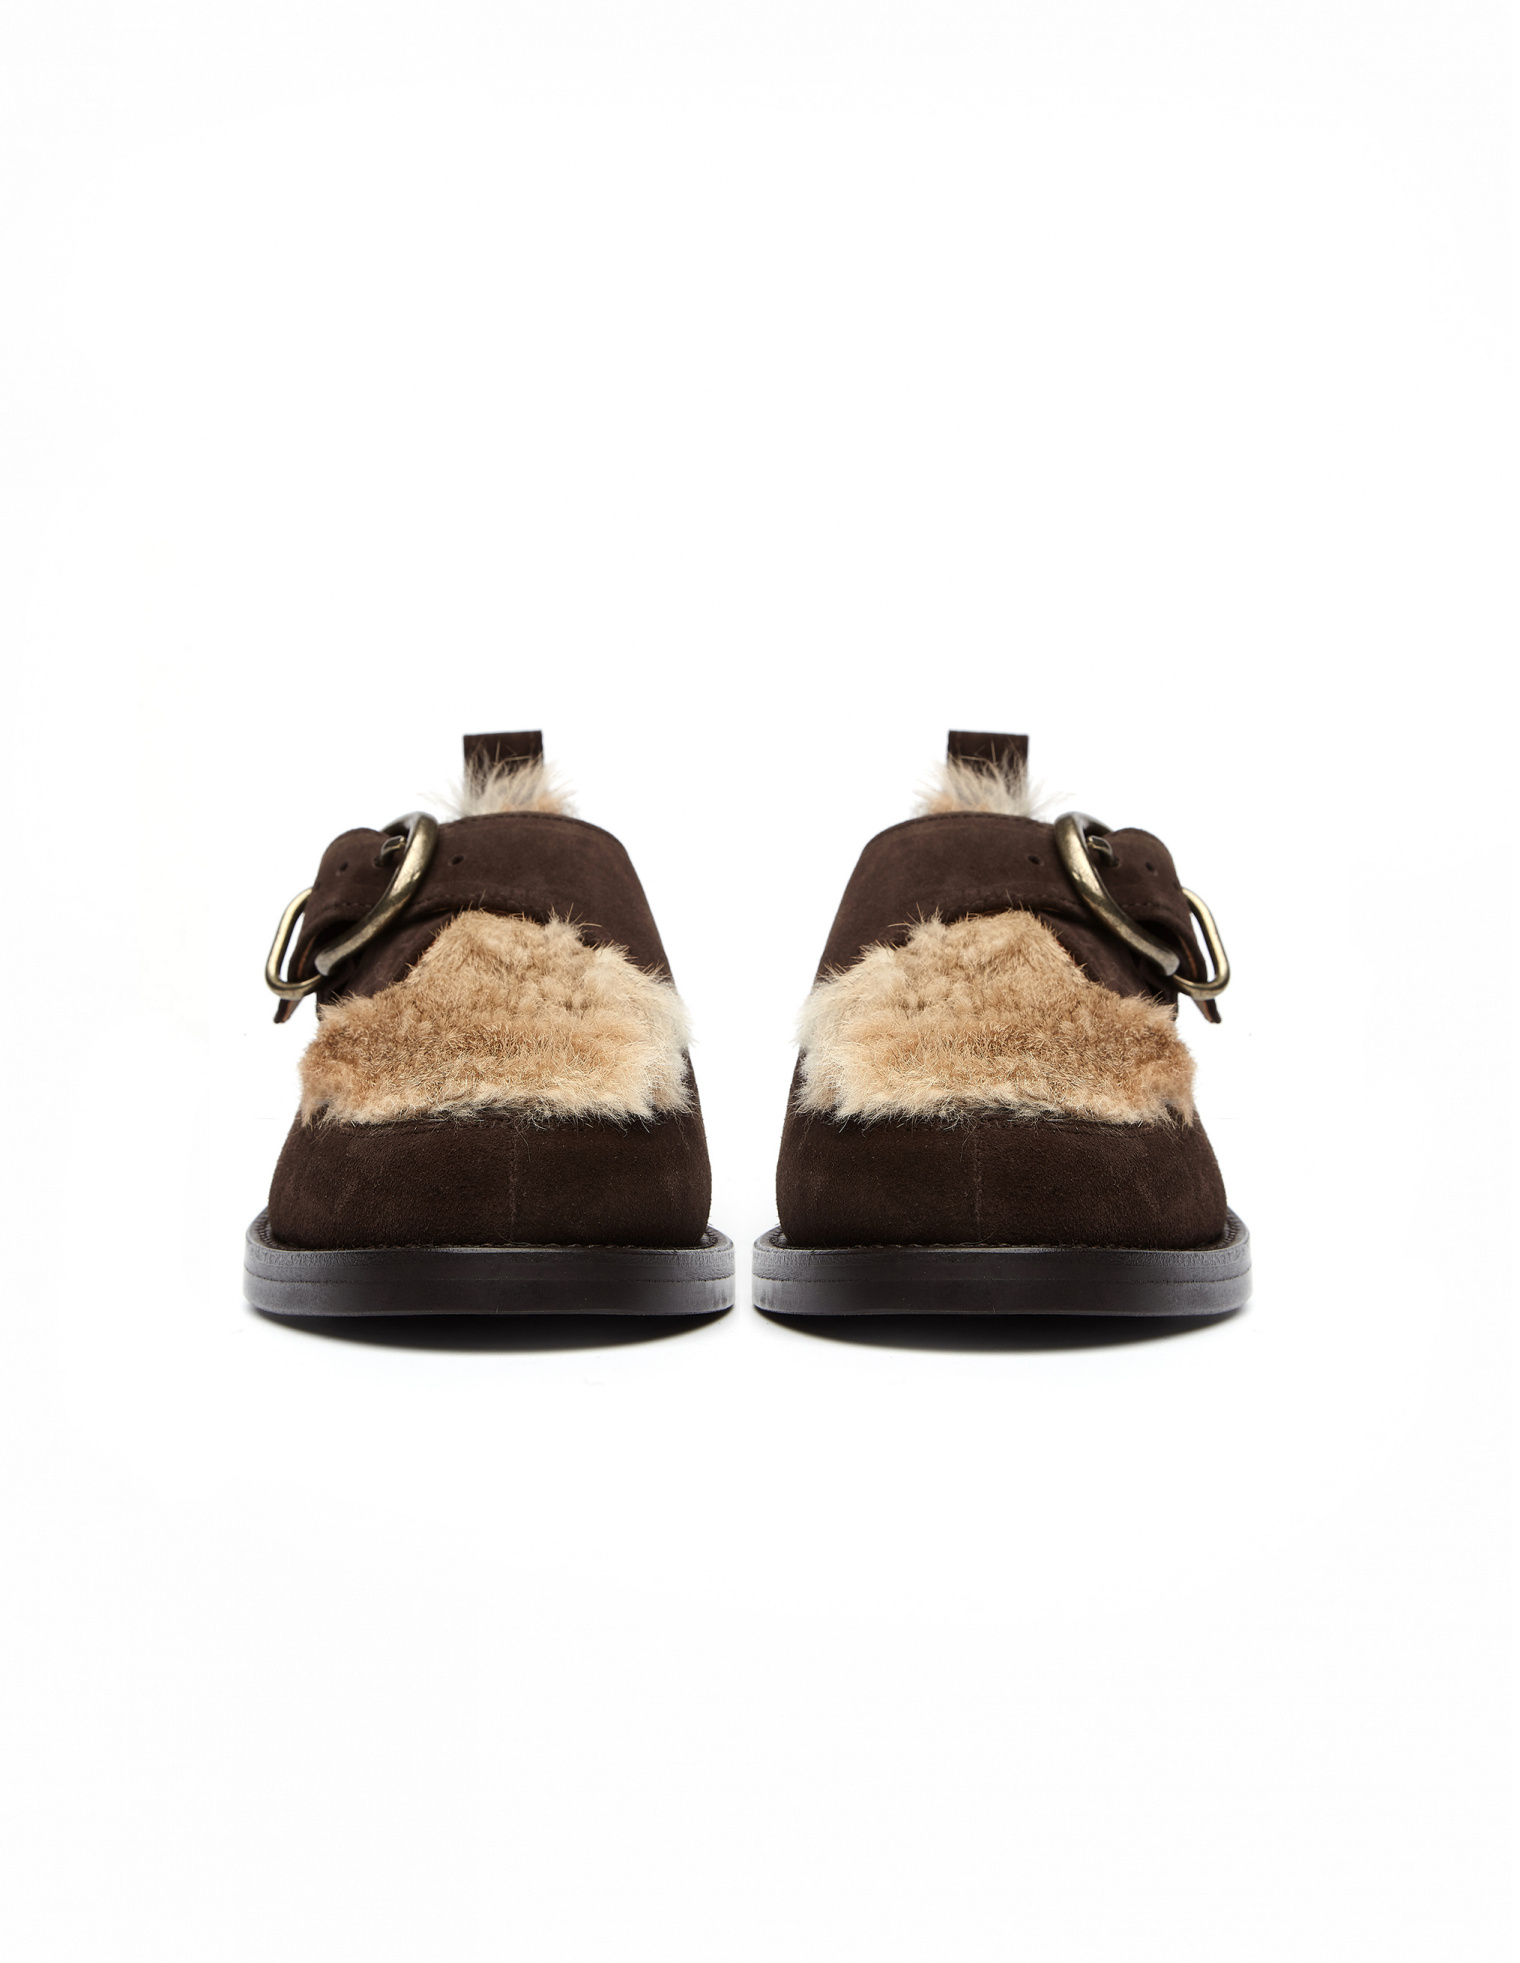 Hender Scheme Monk Shoes with Rabbit Fur Decor